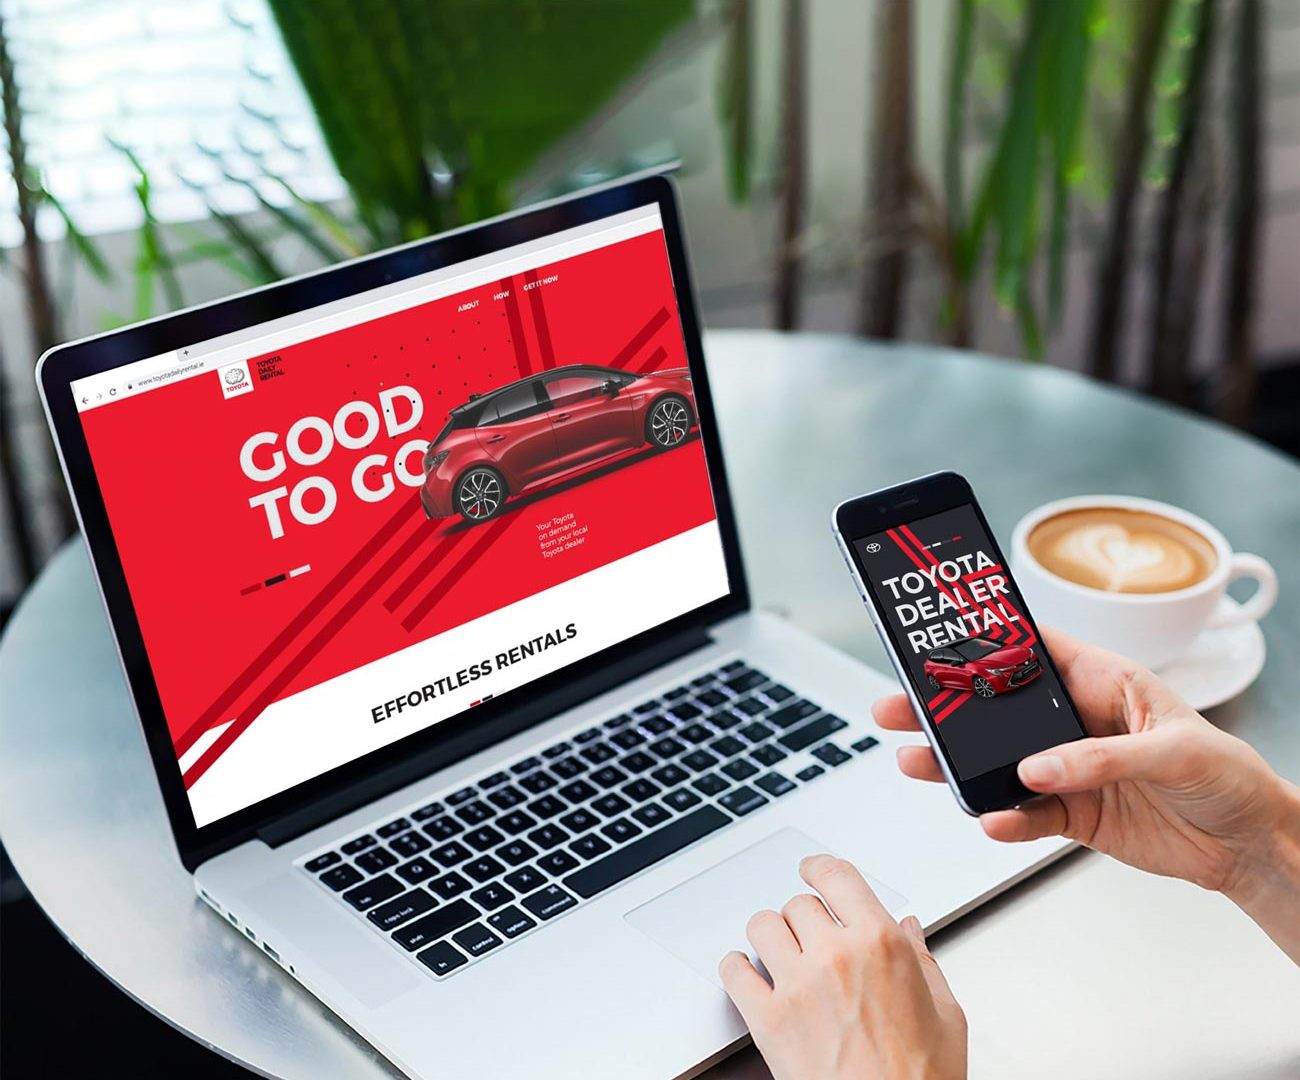 Laptop view of website design and mobile app for Toyota Dealer Rental